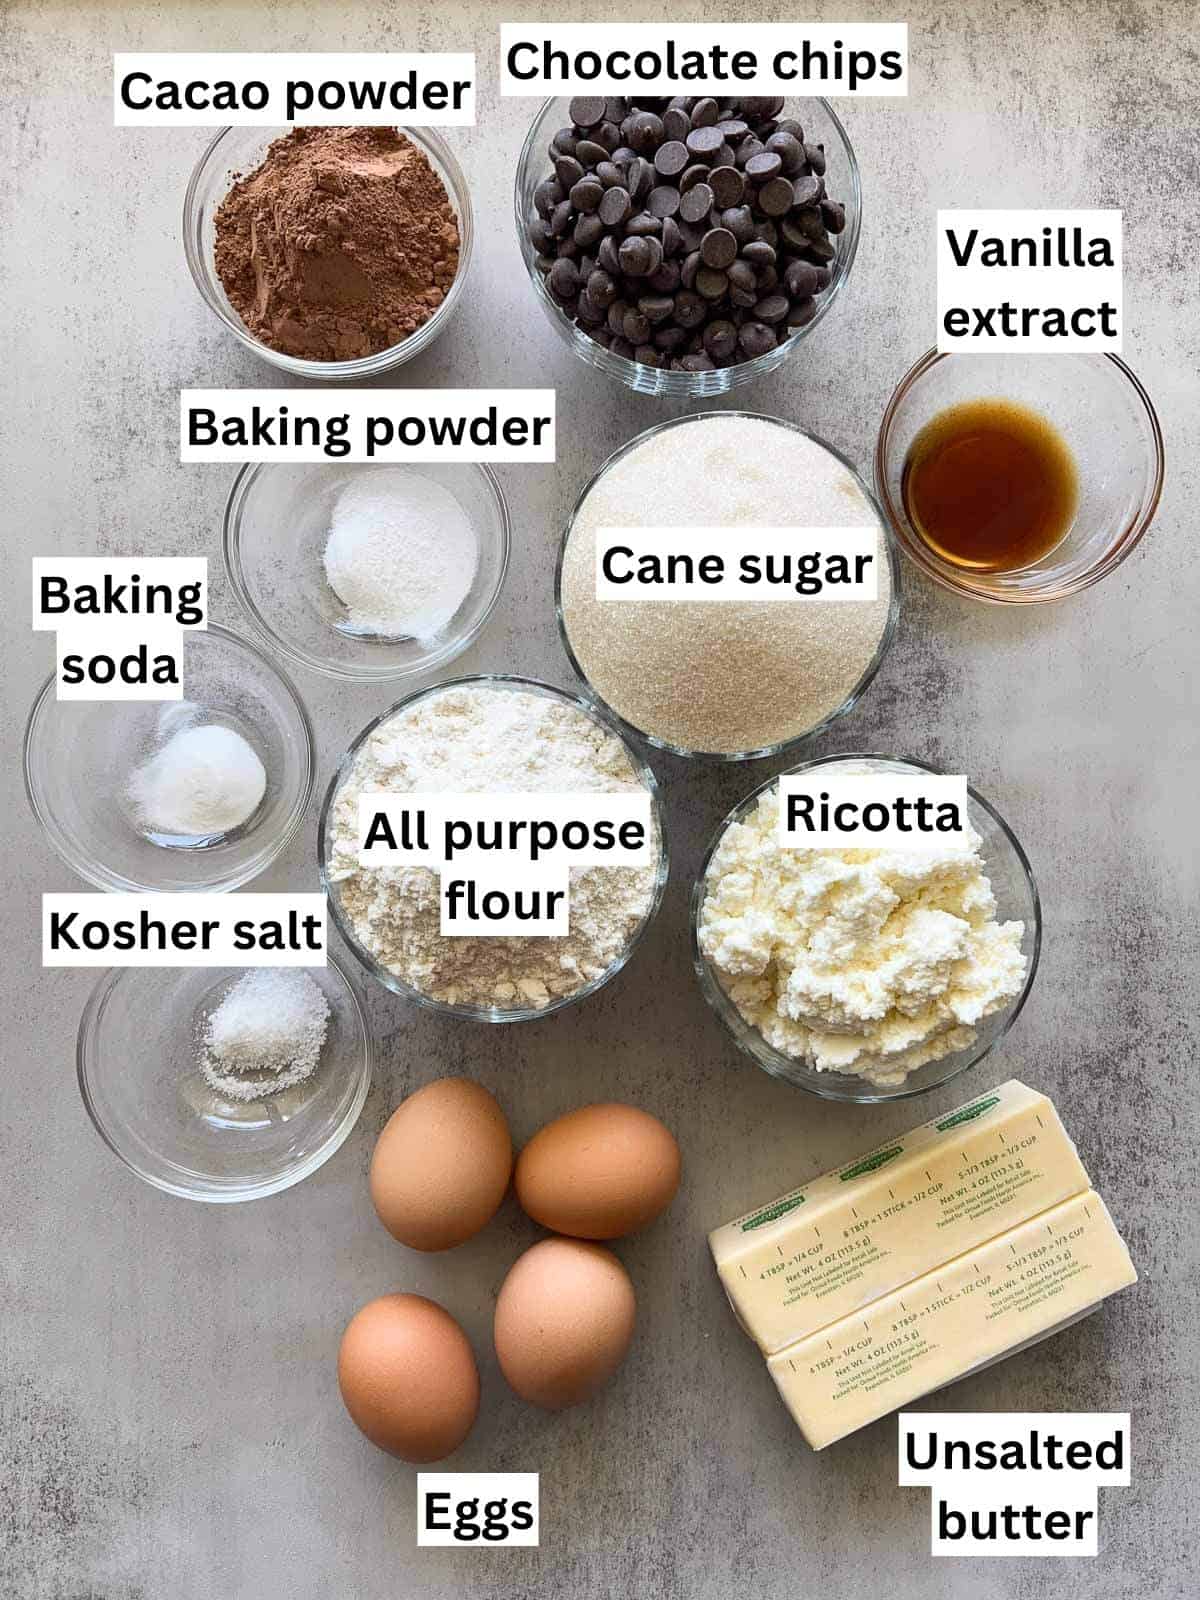 The ingredients to make chocolate ricotta cake.